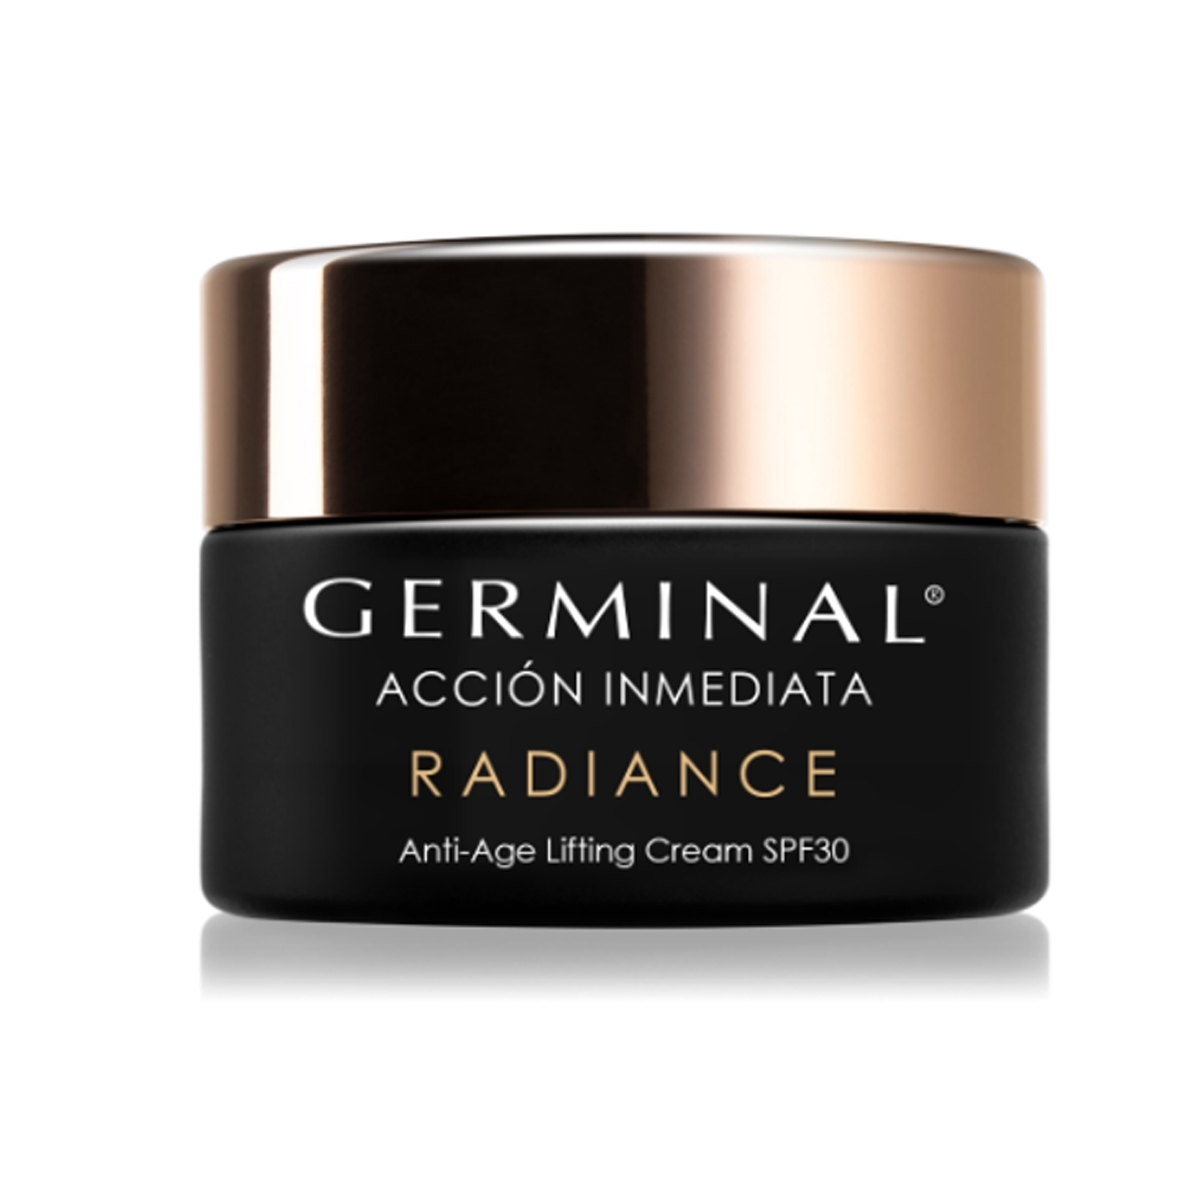 Radiance Anti-Age Lifting Cream SPF 30 de Germinal.